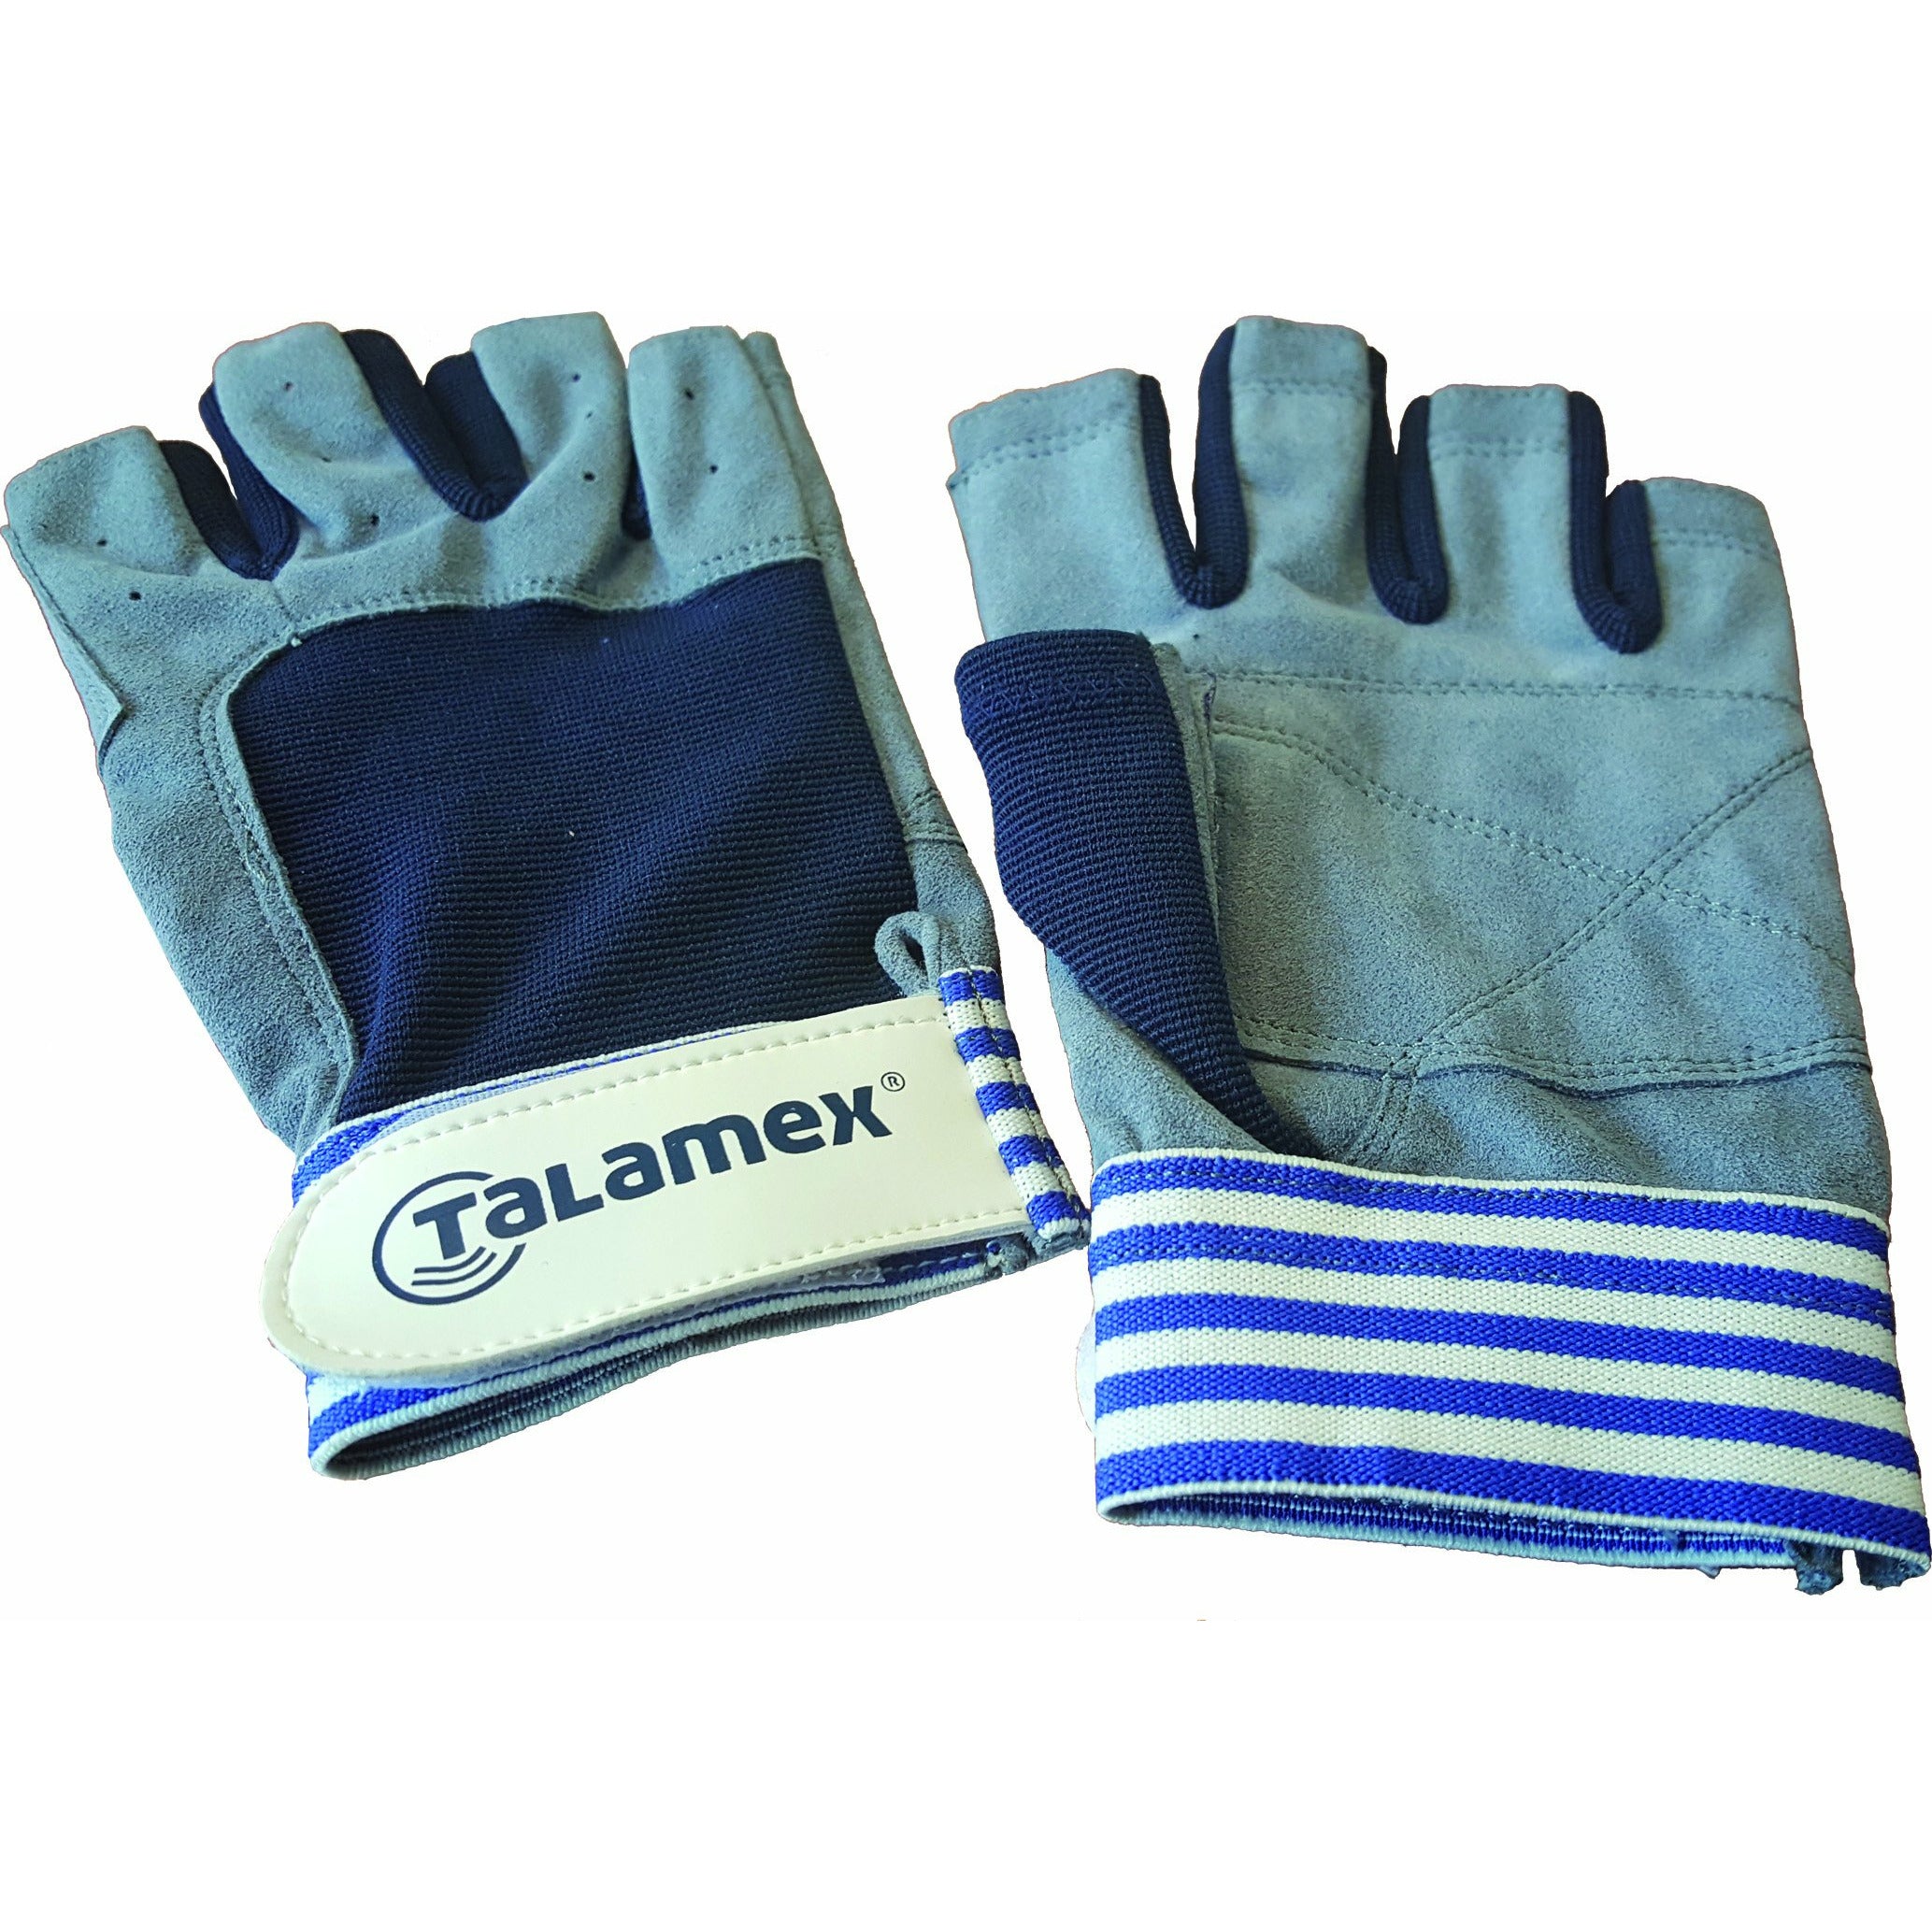 Talamex S'Gloves Amara Xlarge/Open 20805004